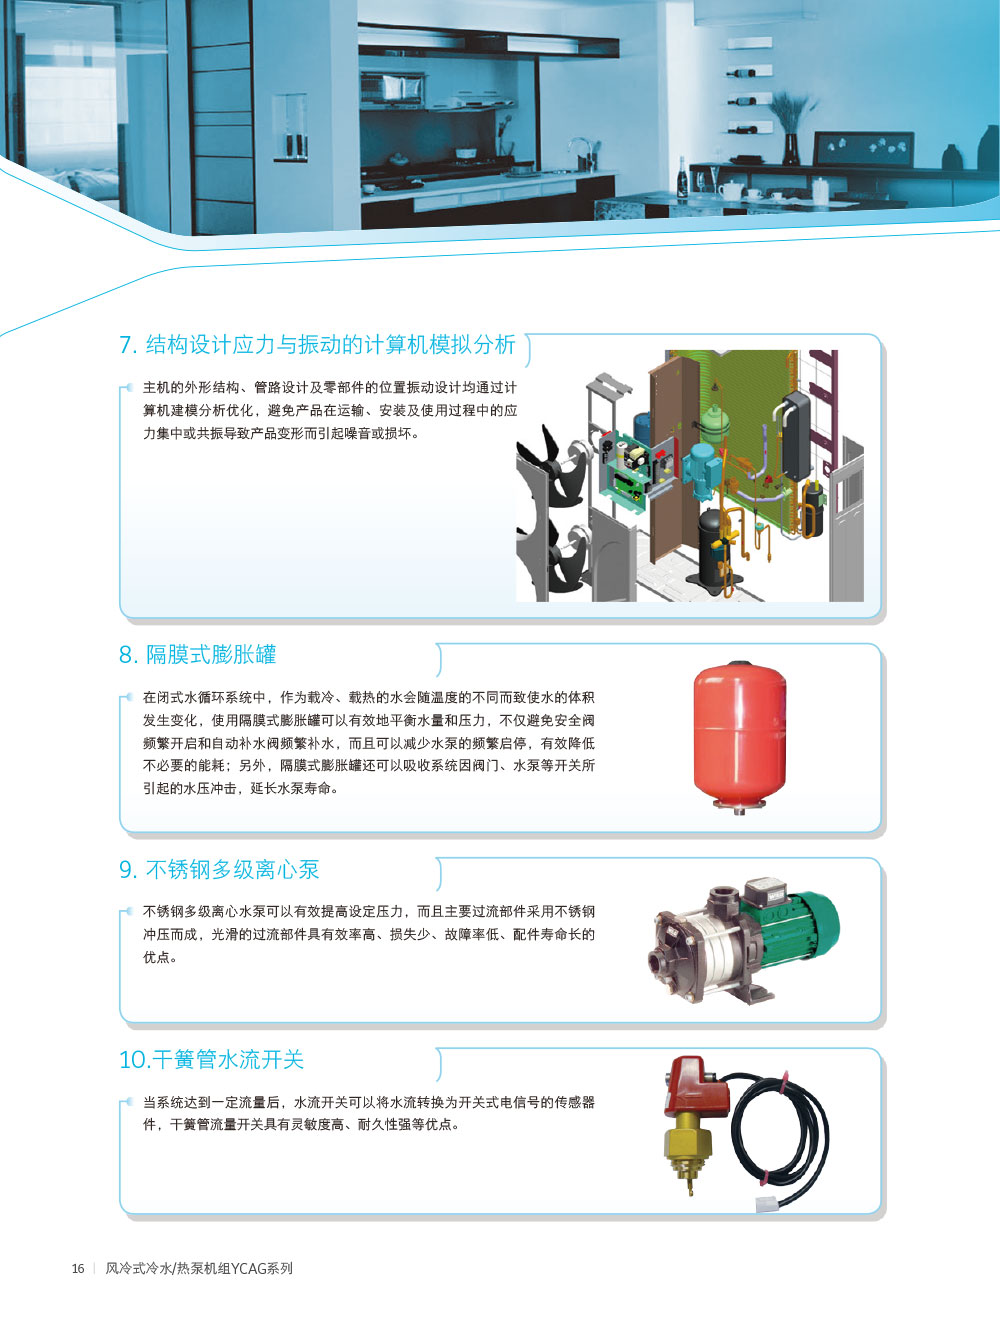 YCAG风冷热泵机组(0515)